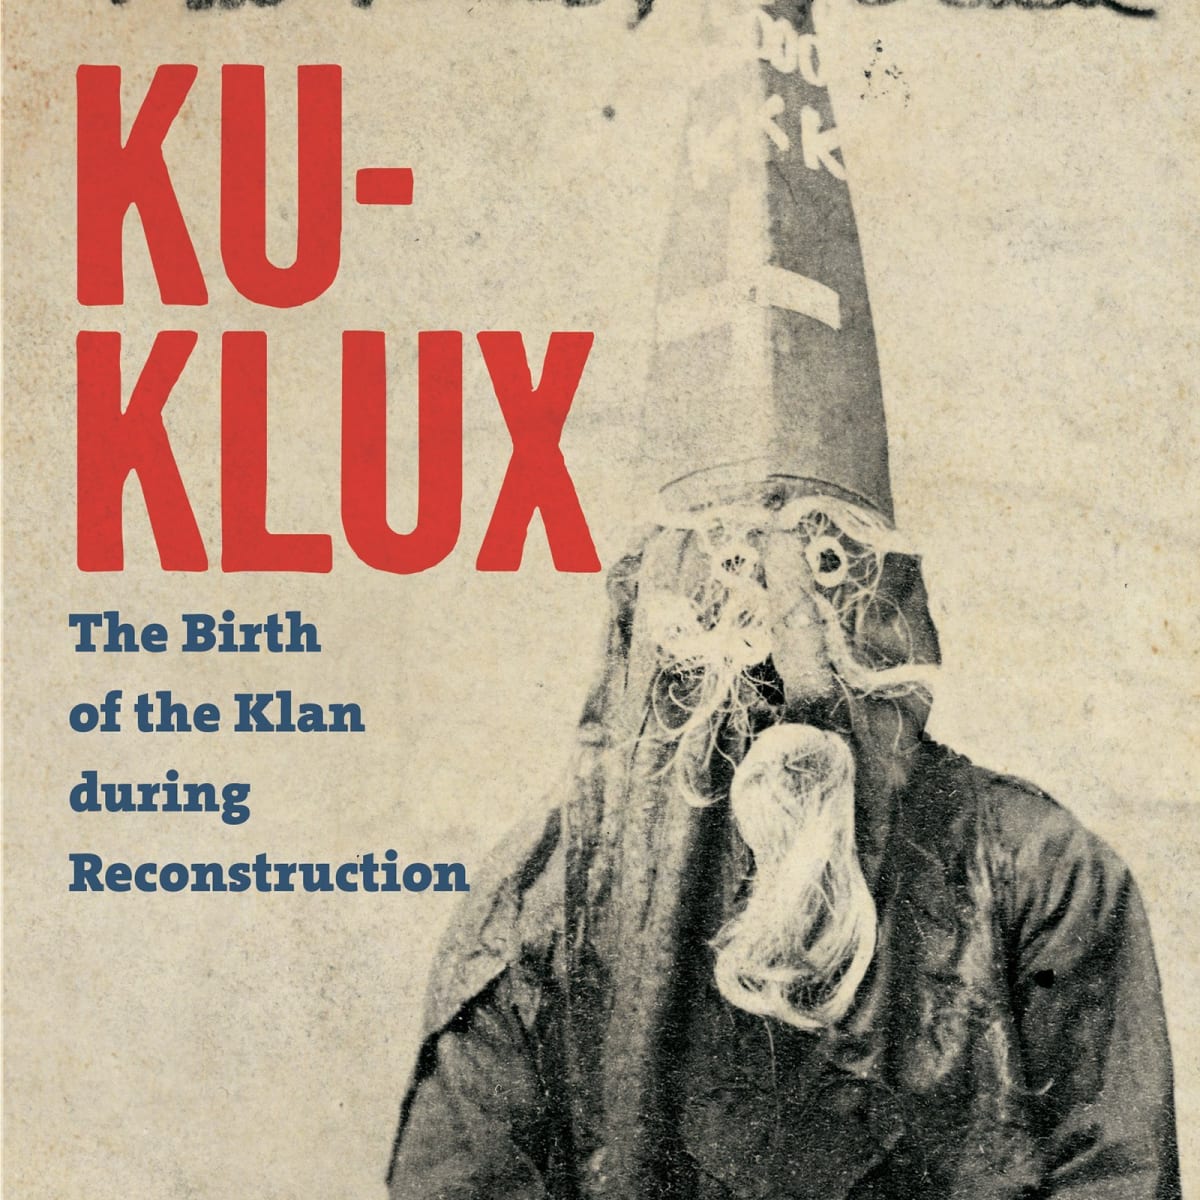 Was klux ku what klan the Ku Klux